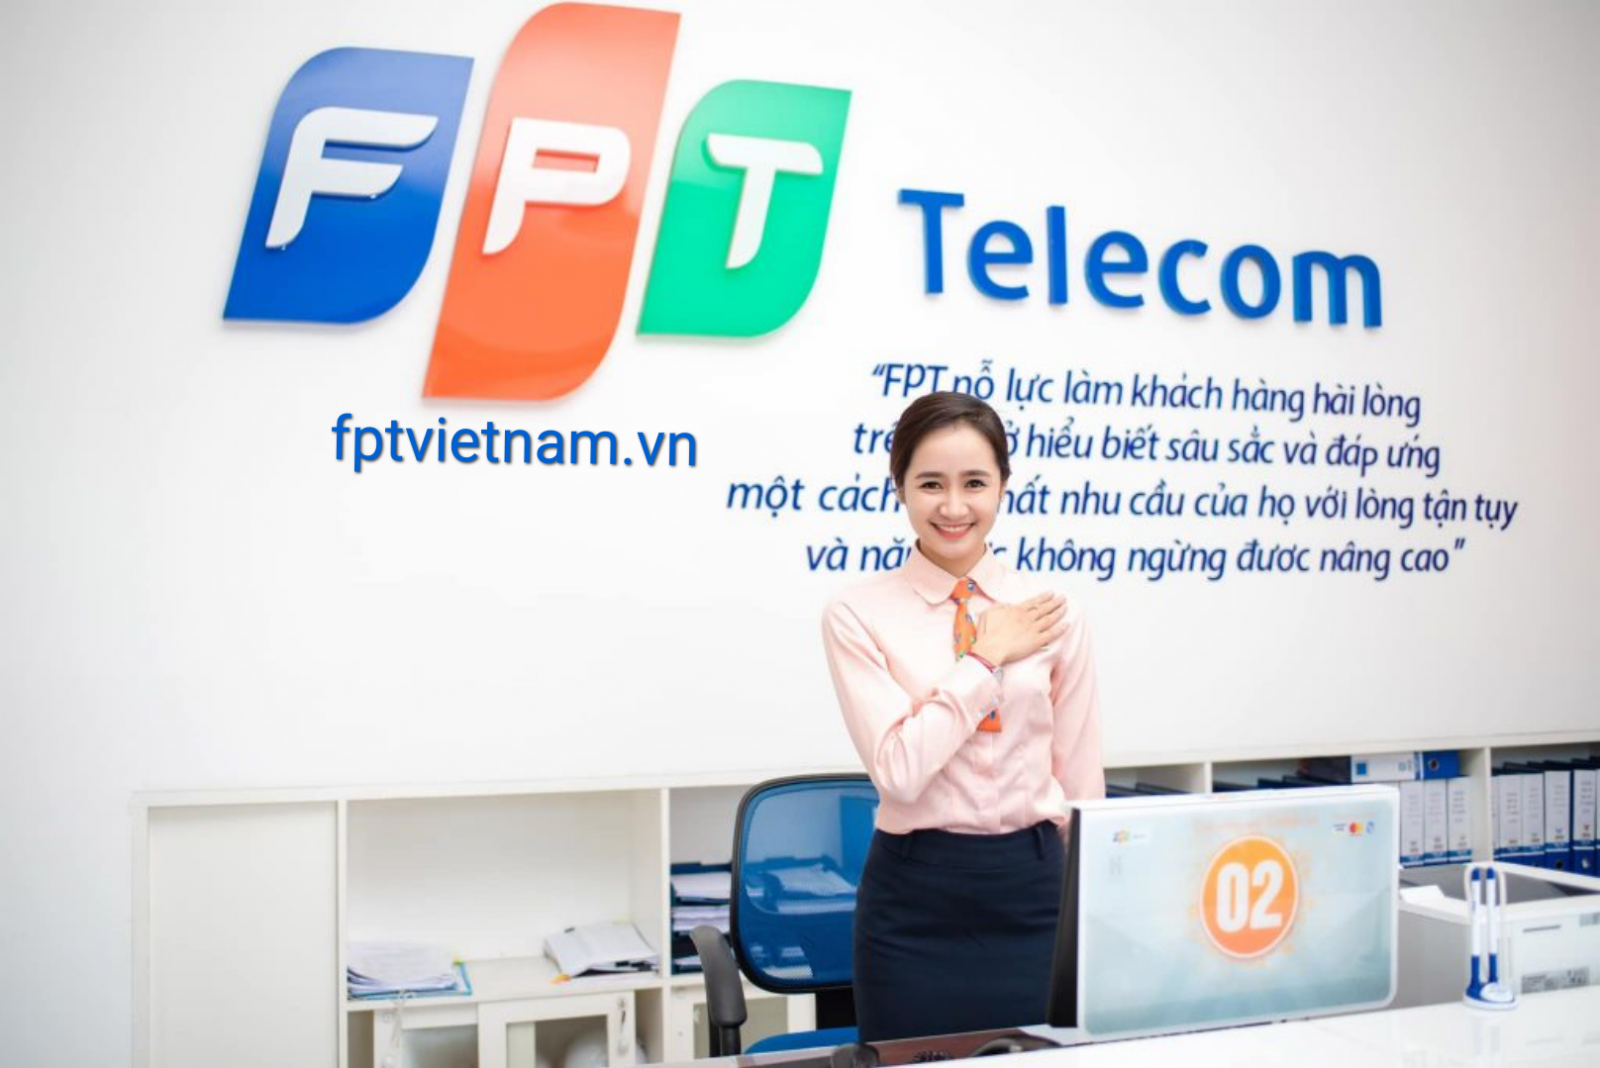 dịch vụ fpt telecom Gia Lai